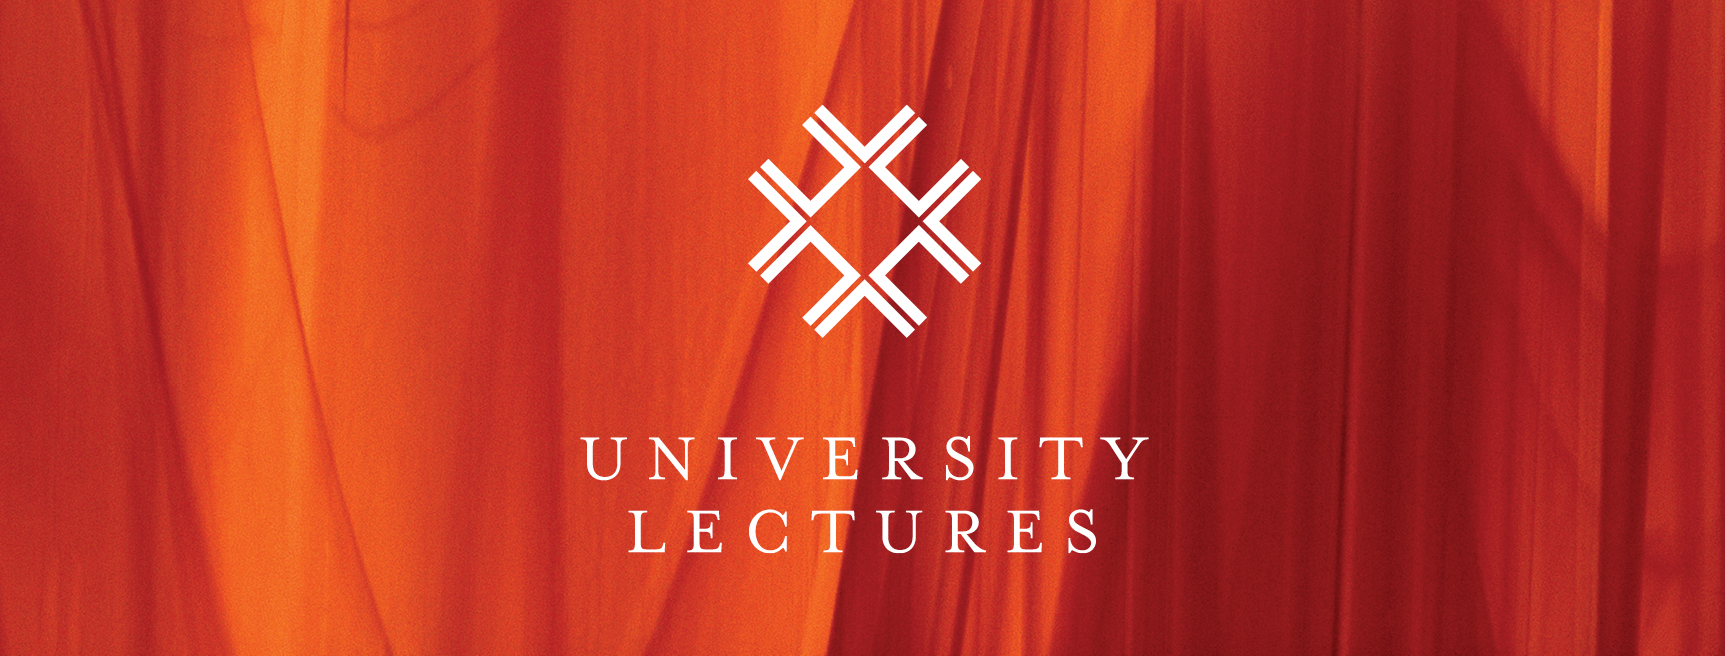 University Lectures header logo